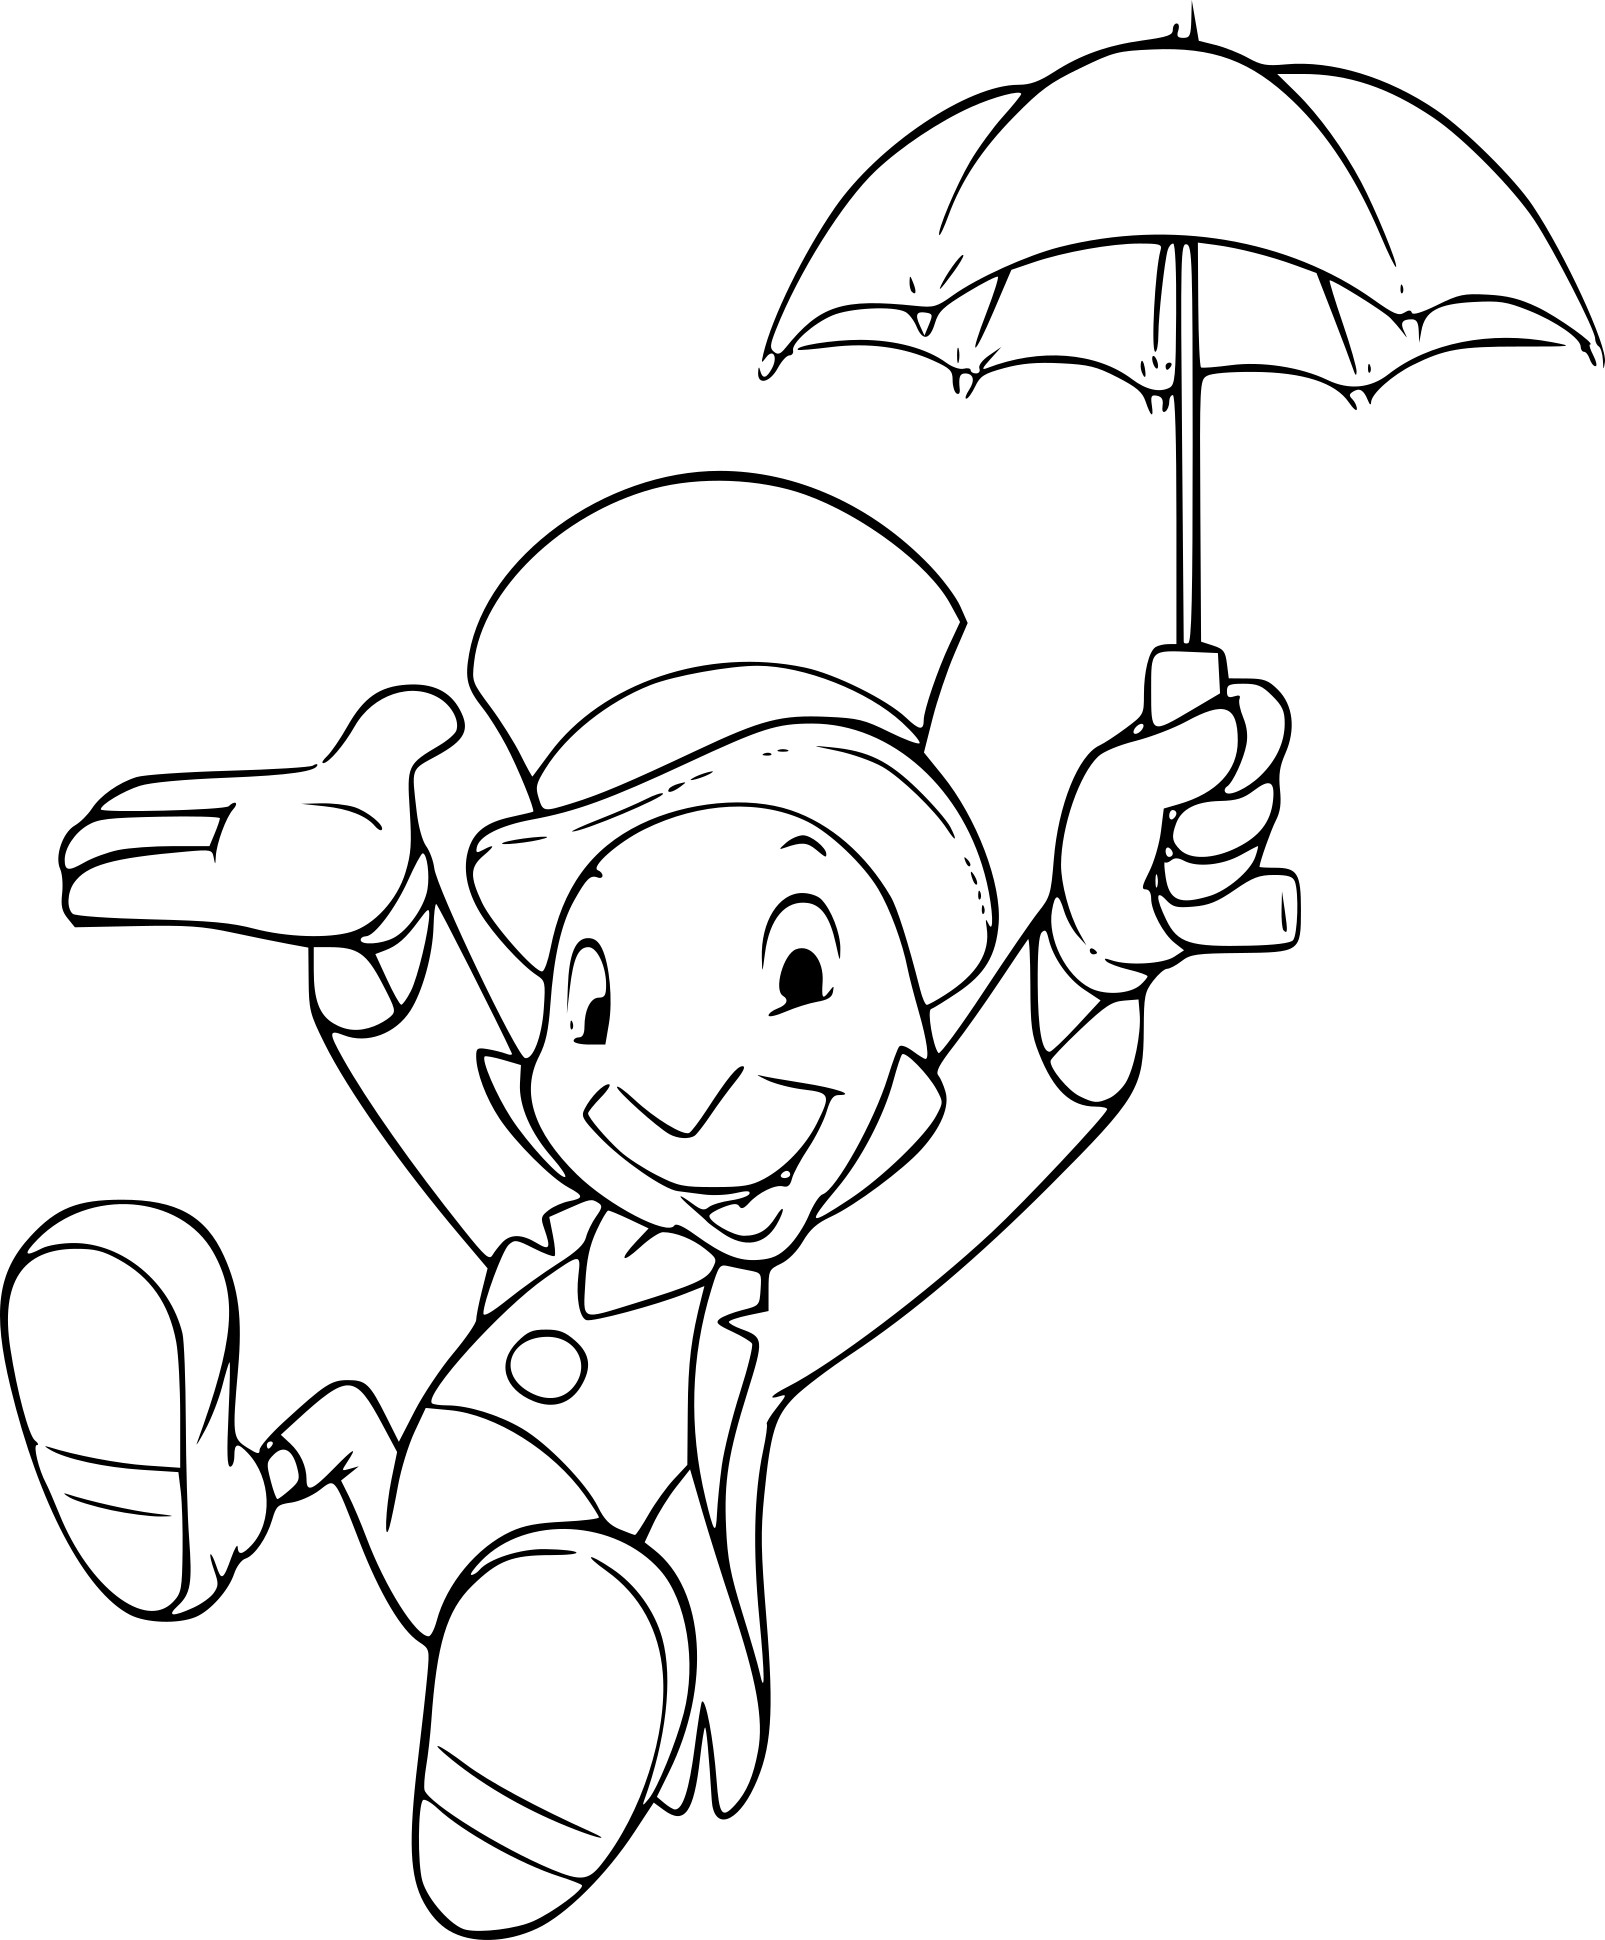 Jiminy Cricket coloring page